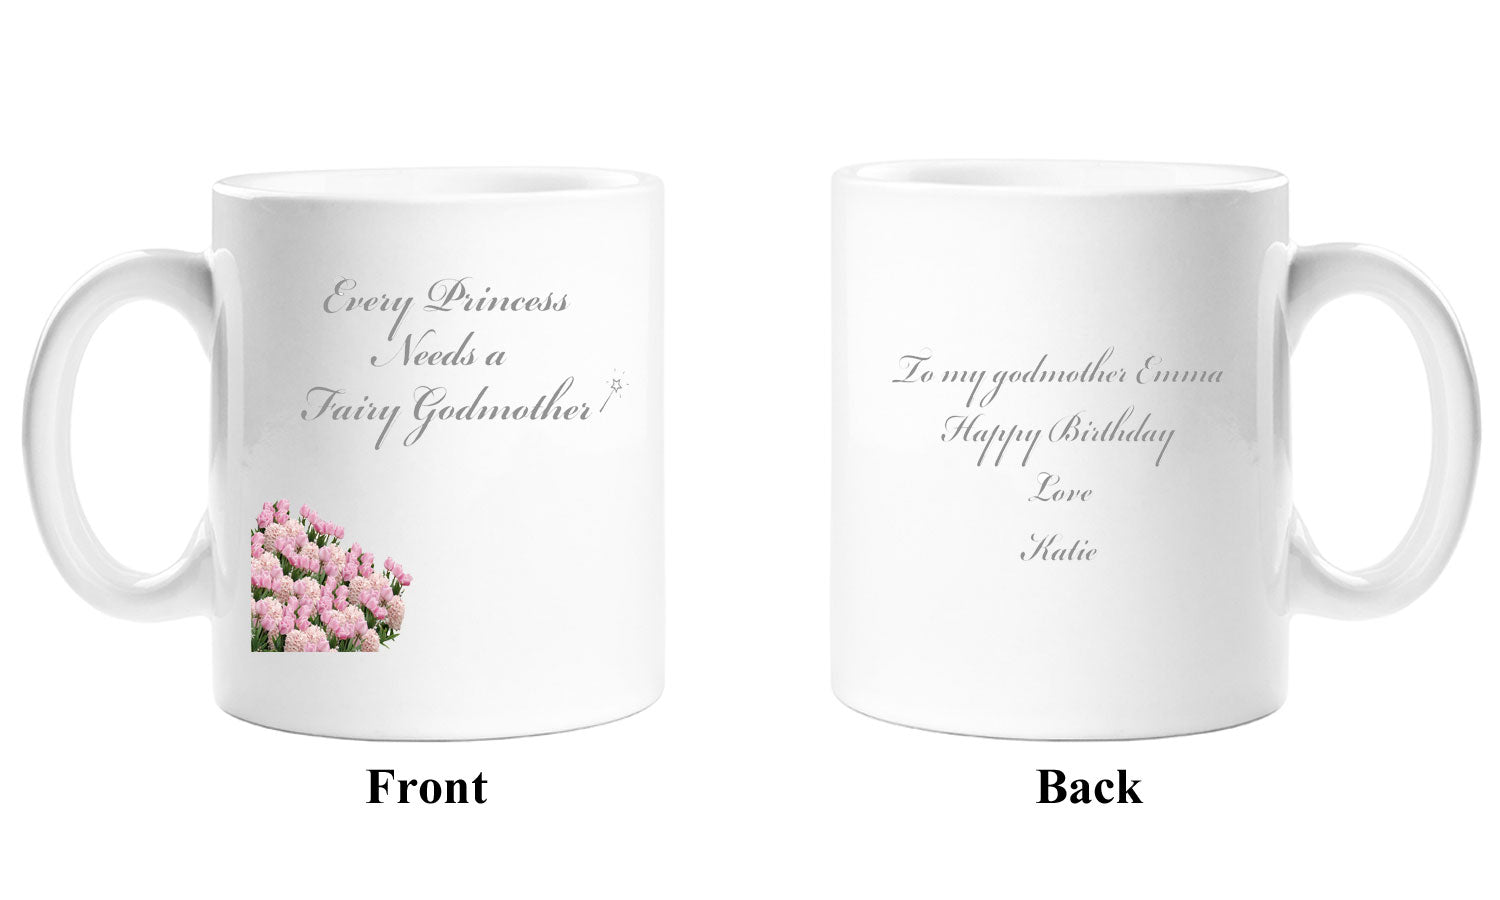 Every princess needs a fairy Godmother mug